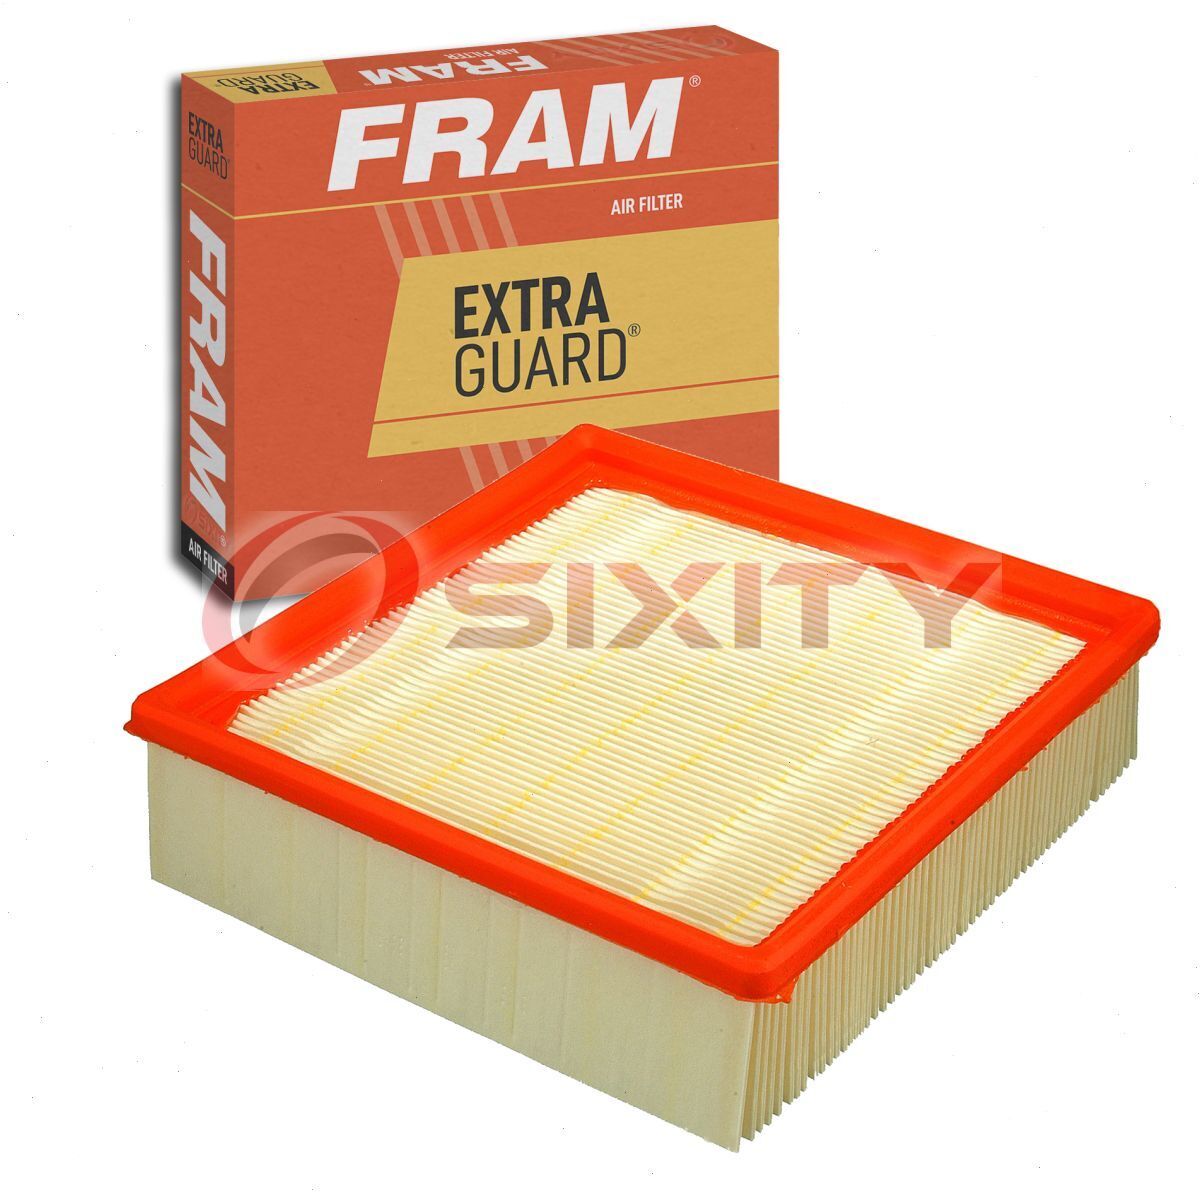 FRAM Extra Guard Air Filter for 1980-1985 Volkswagen Vanagon Intake Inlet hb